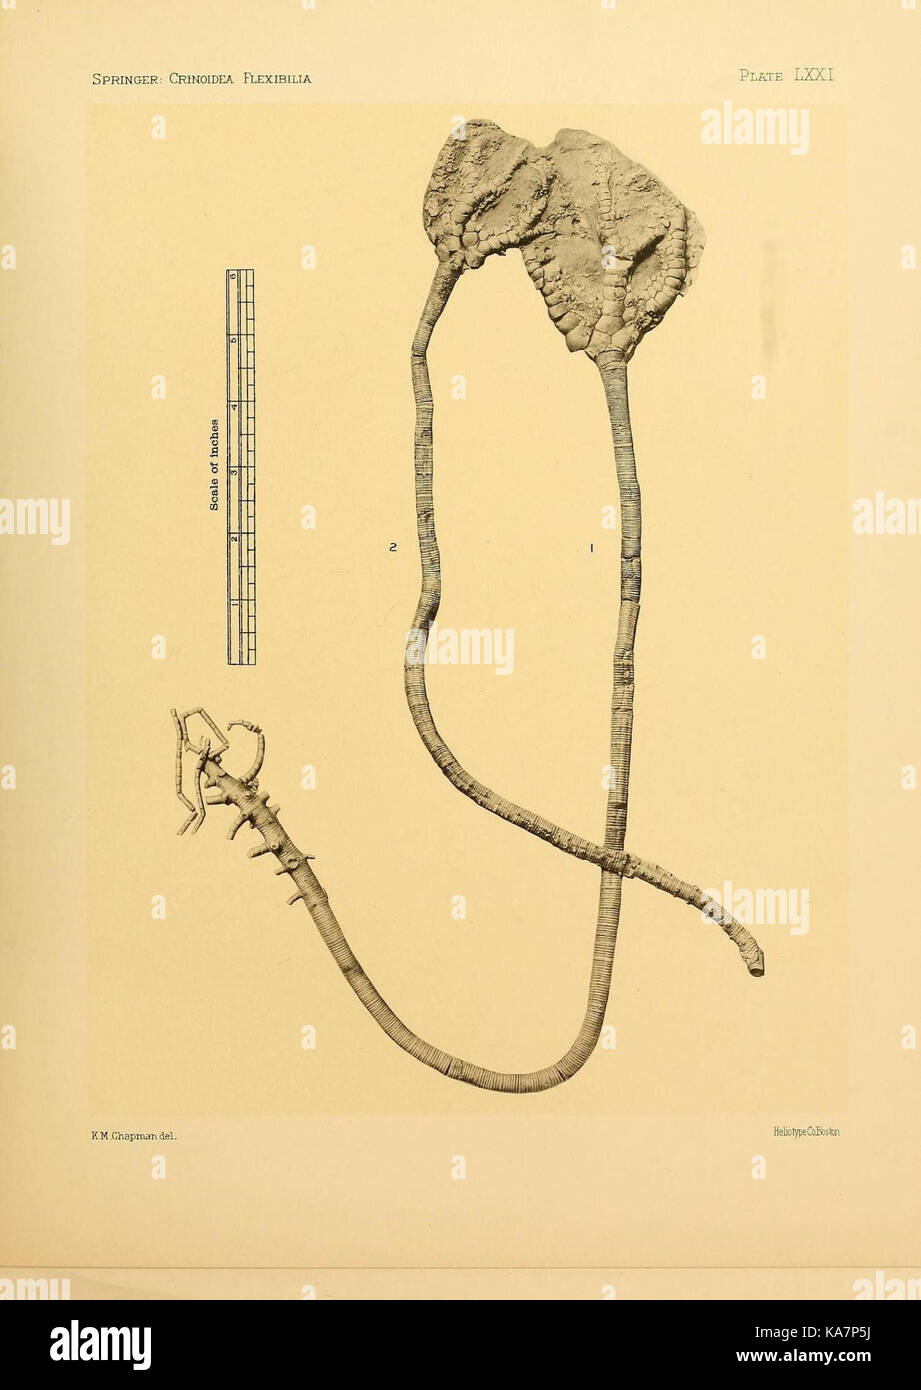 The Crinoidea flexibilia (9669717349) Stock Photo